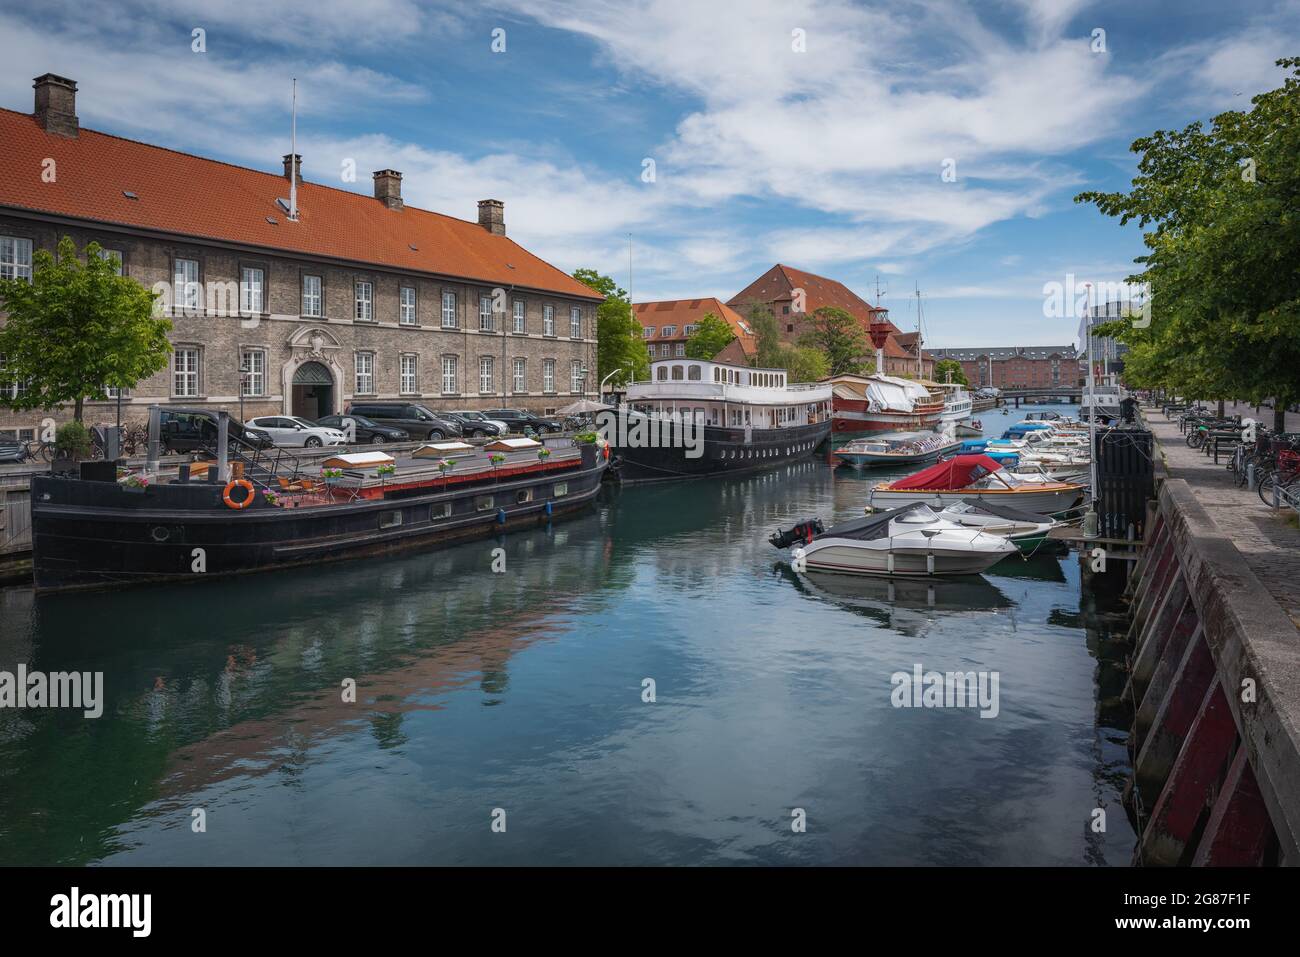 Christians Brygge canal and boats - Copenhagen, Denmark Stock Photo